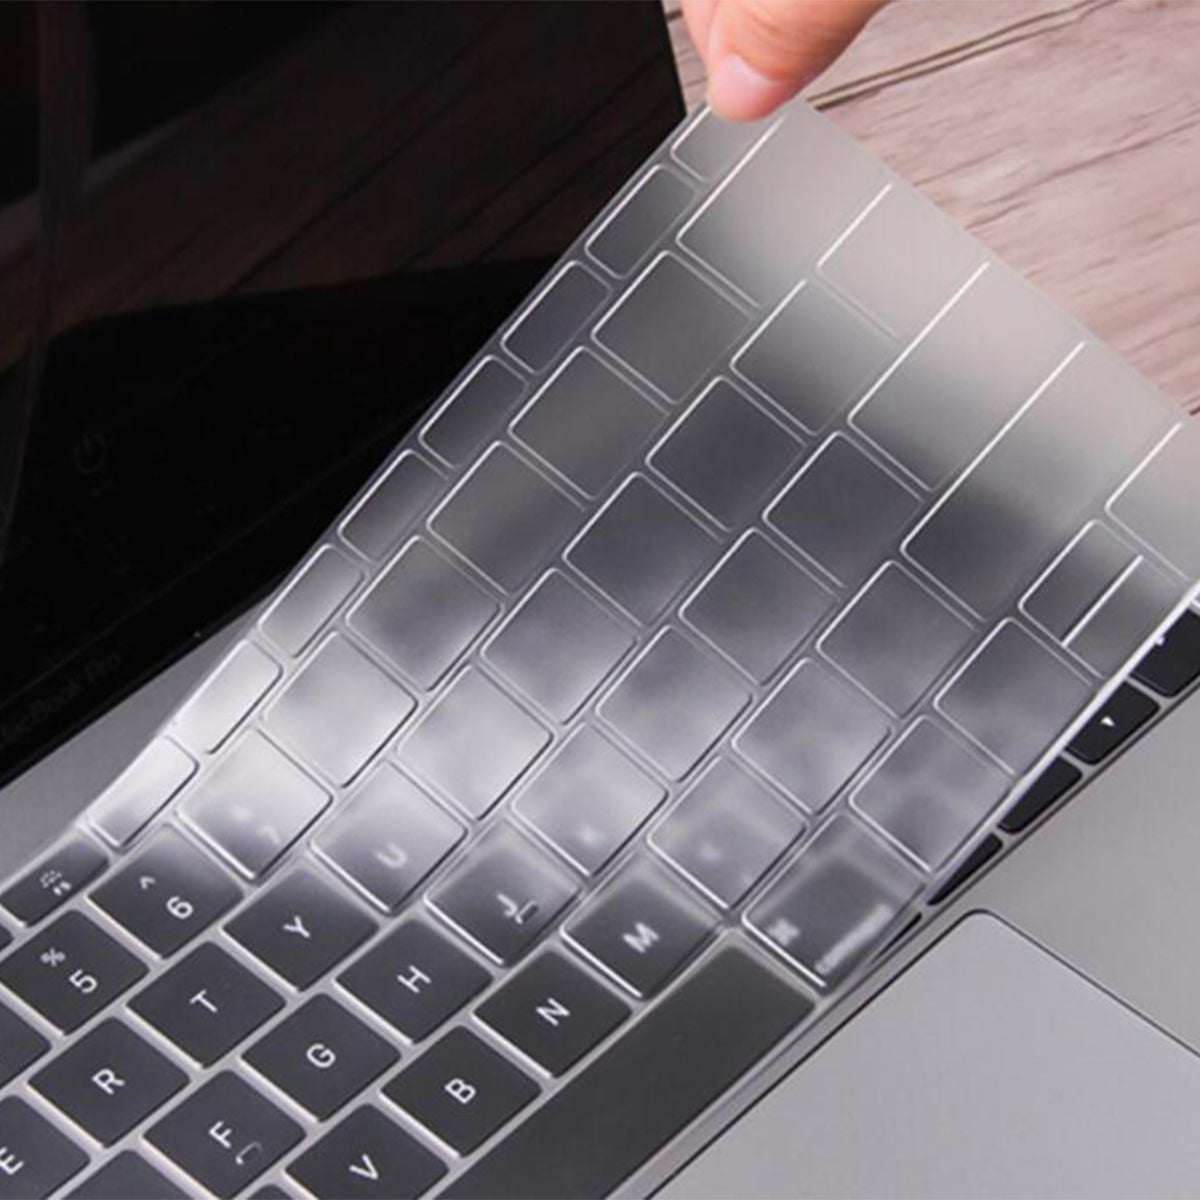 Practical Soft TPU Keyboard Protective Cover Film for MacBook Air 13inch (A1466/A1369/A1278/A1286/A1502/A1425/A1398)